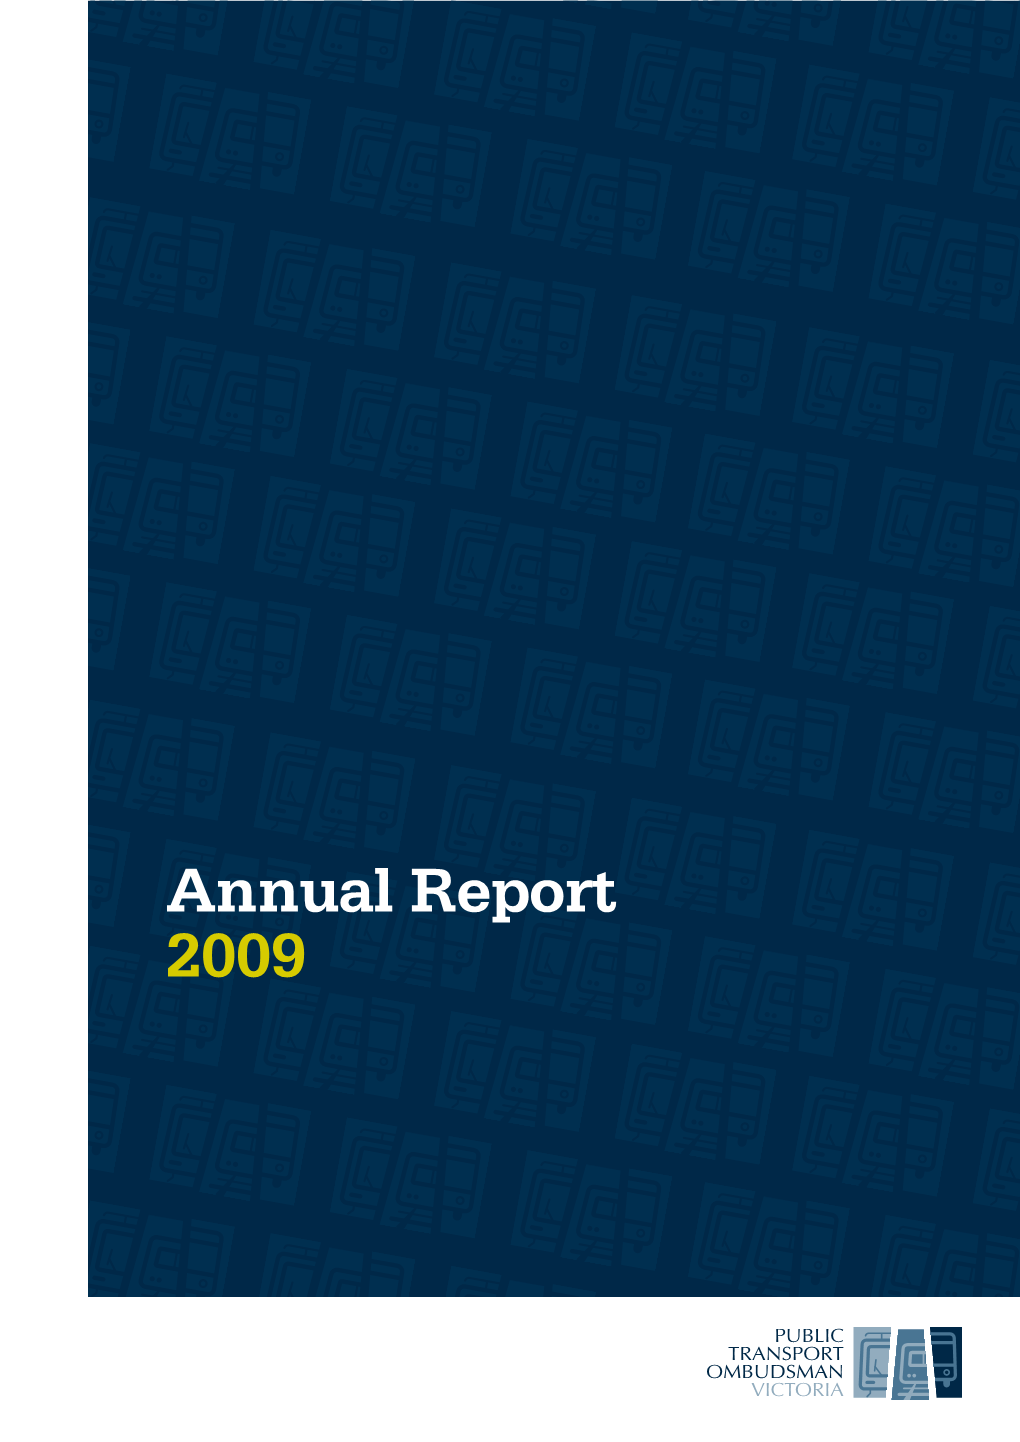 Annual Report 2009 Snapshot